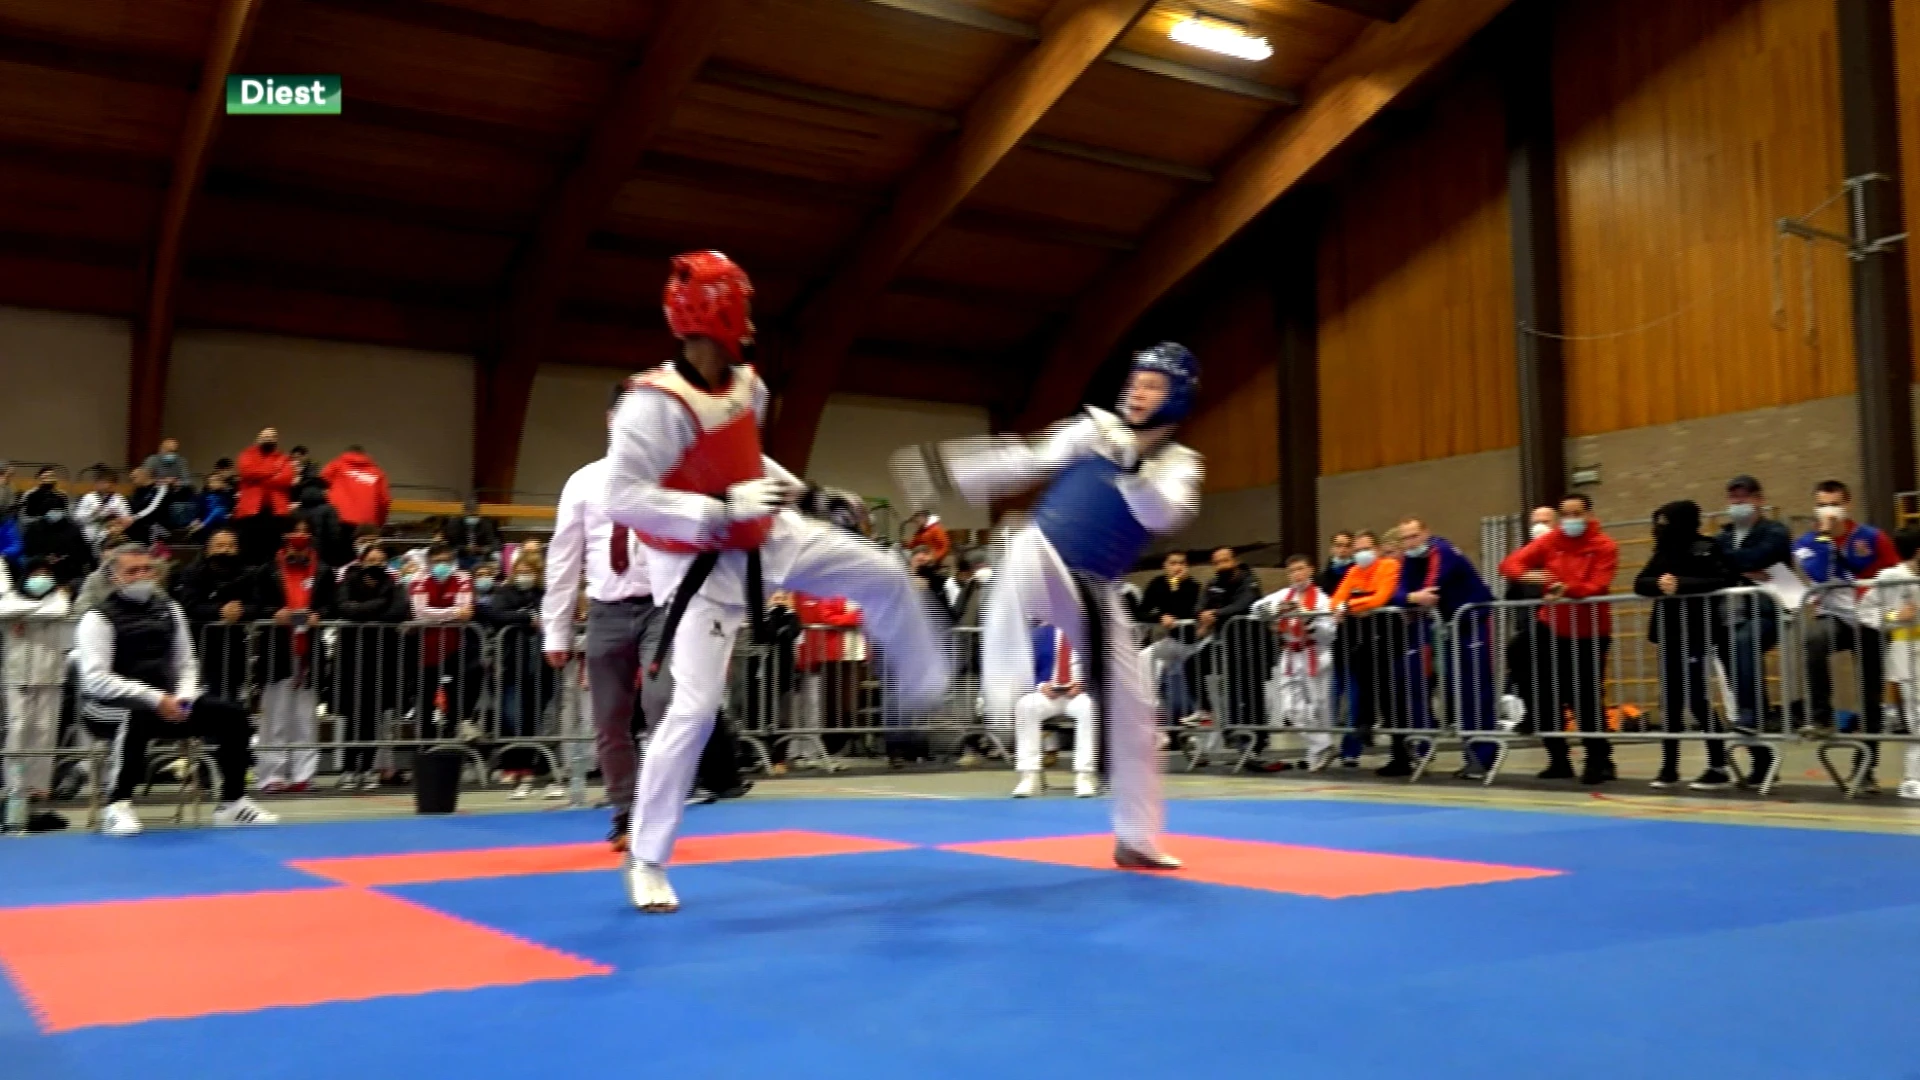 500 taekwondoka's uit alle uithoeken van Europa zakken naar Keumgang Open in Diest af: "Uitstekende ervaring"